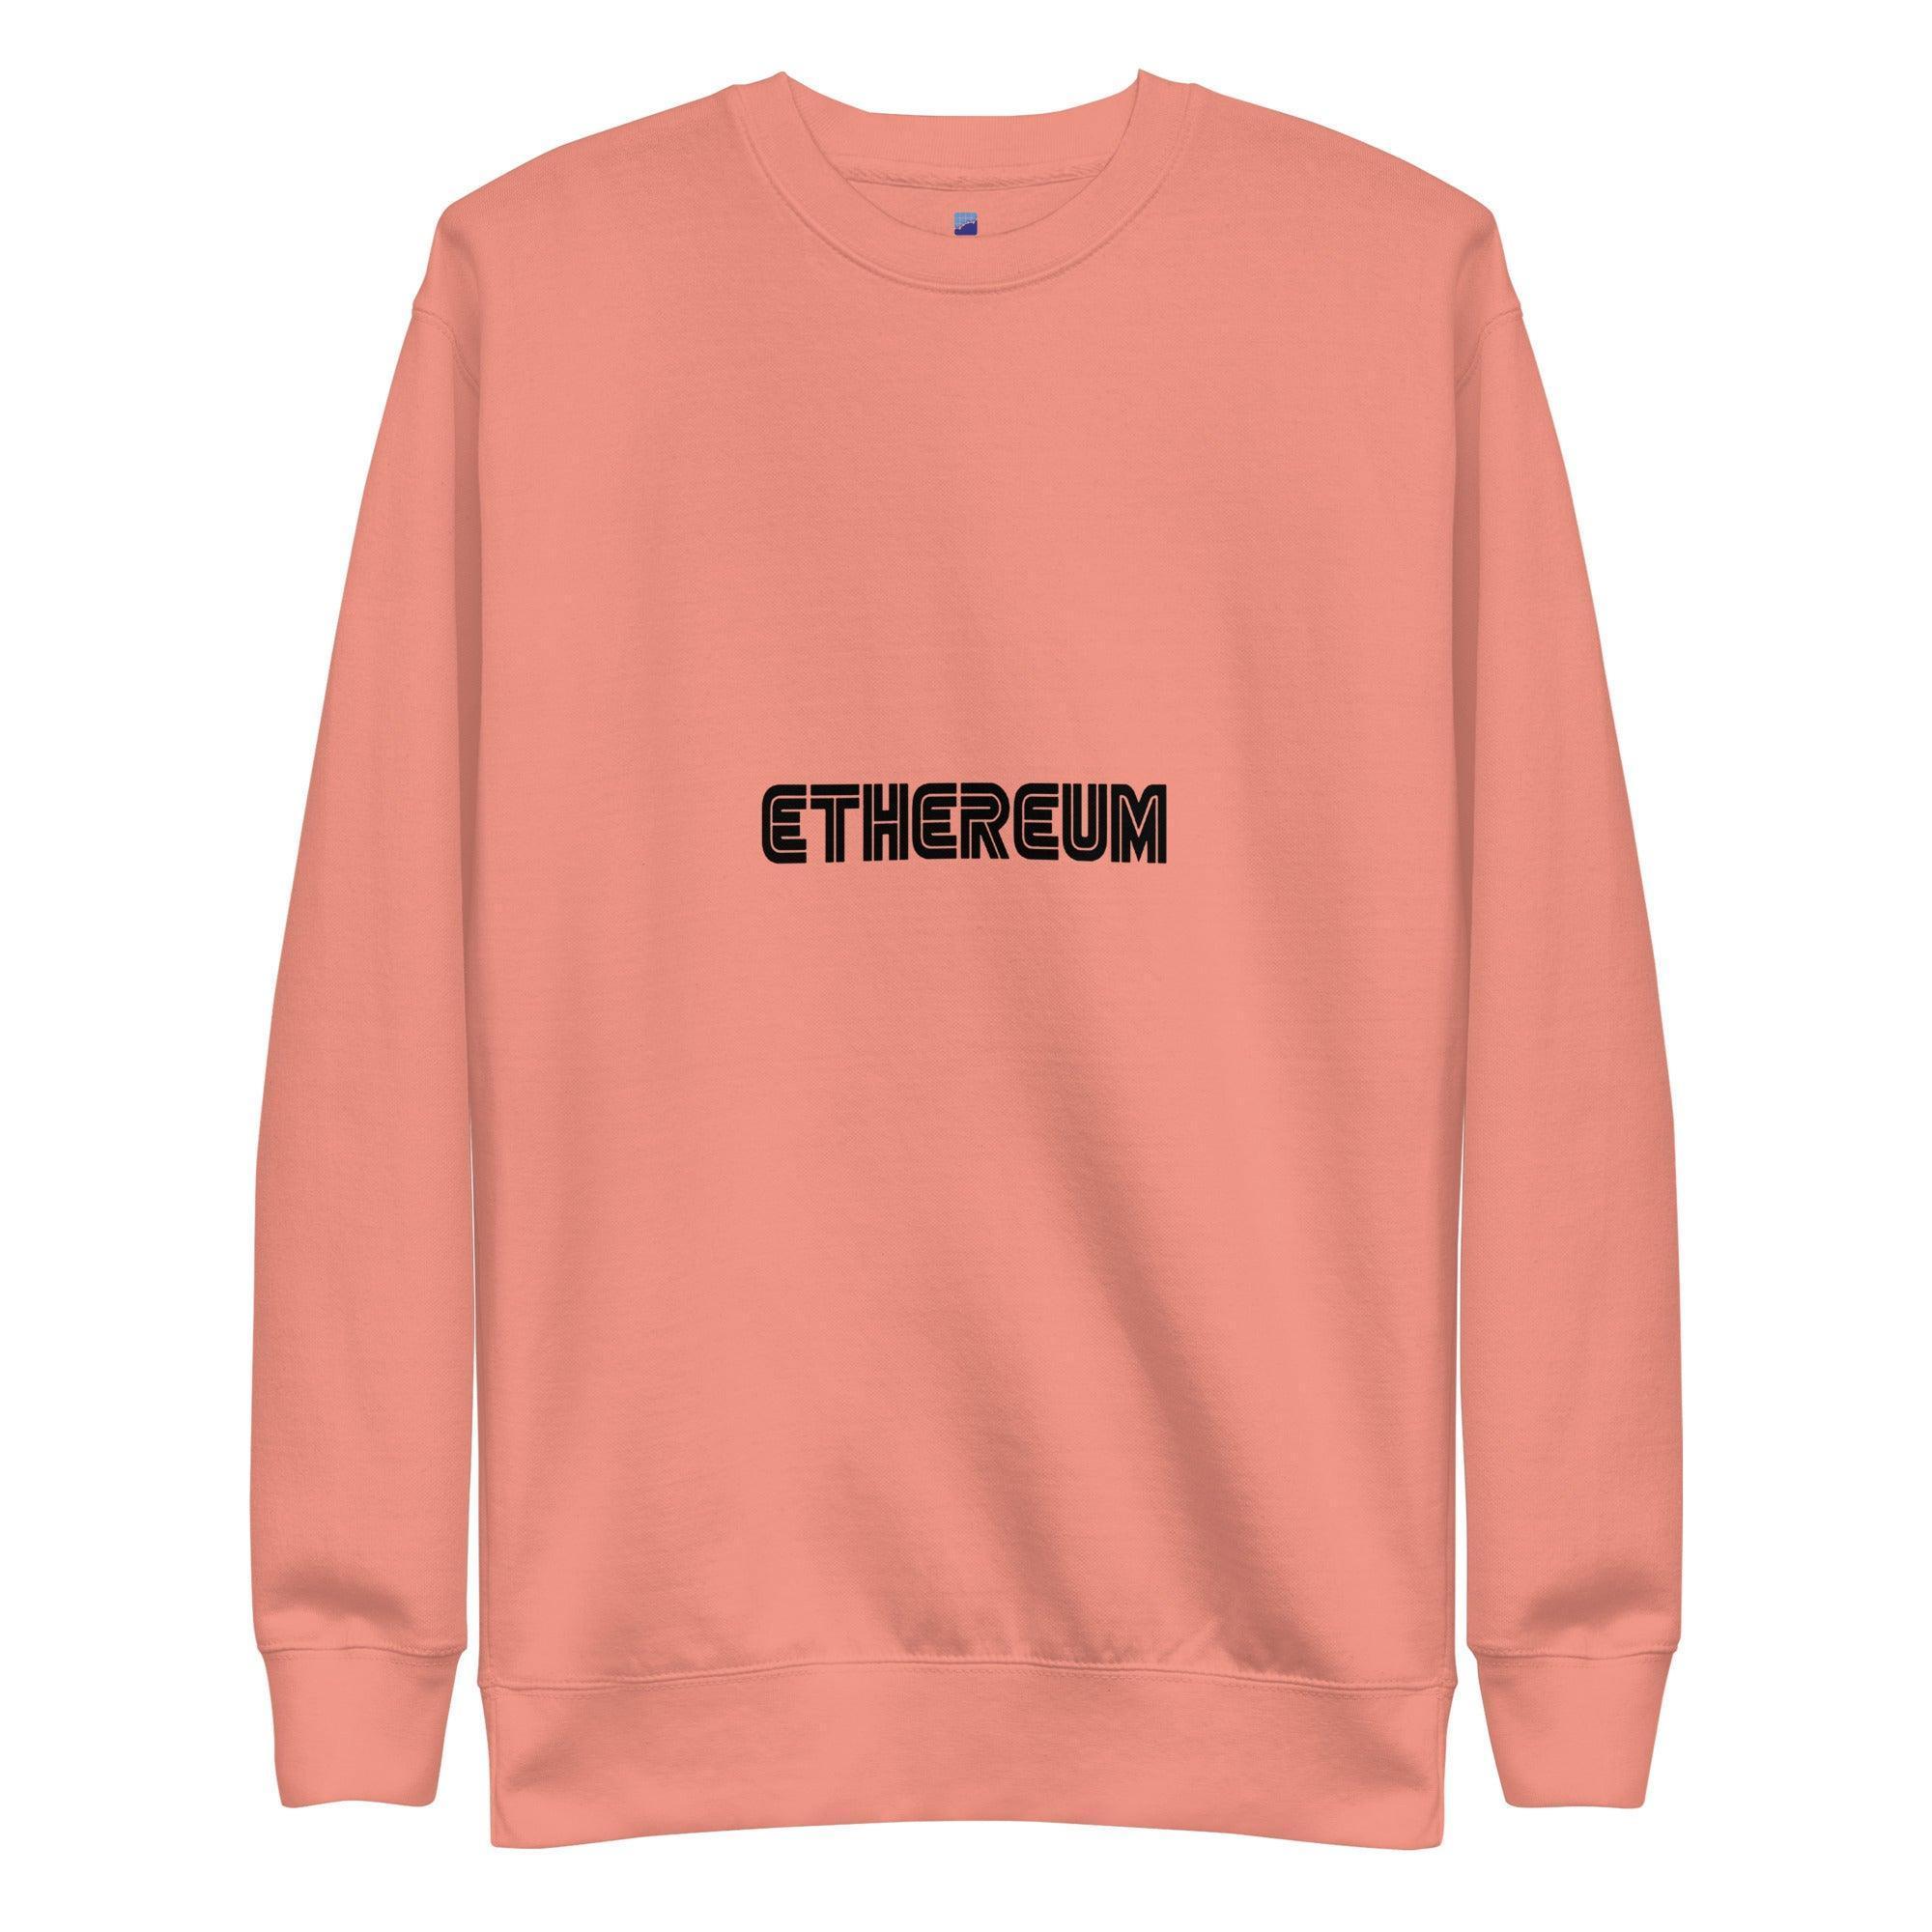 Ethereum Sweatshirt - InvestmenTees